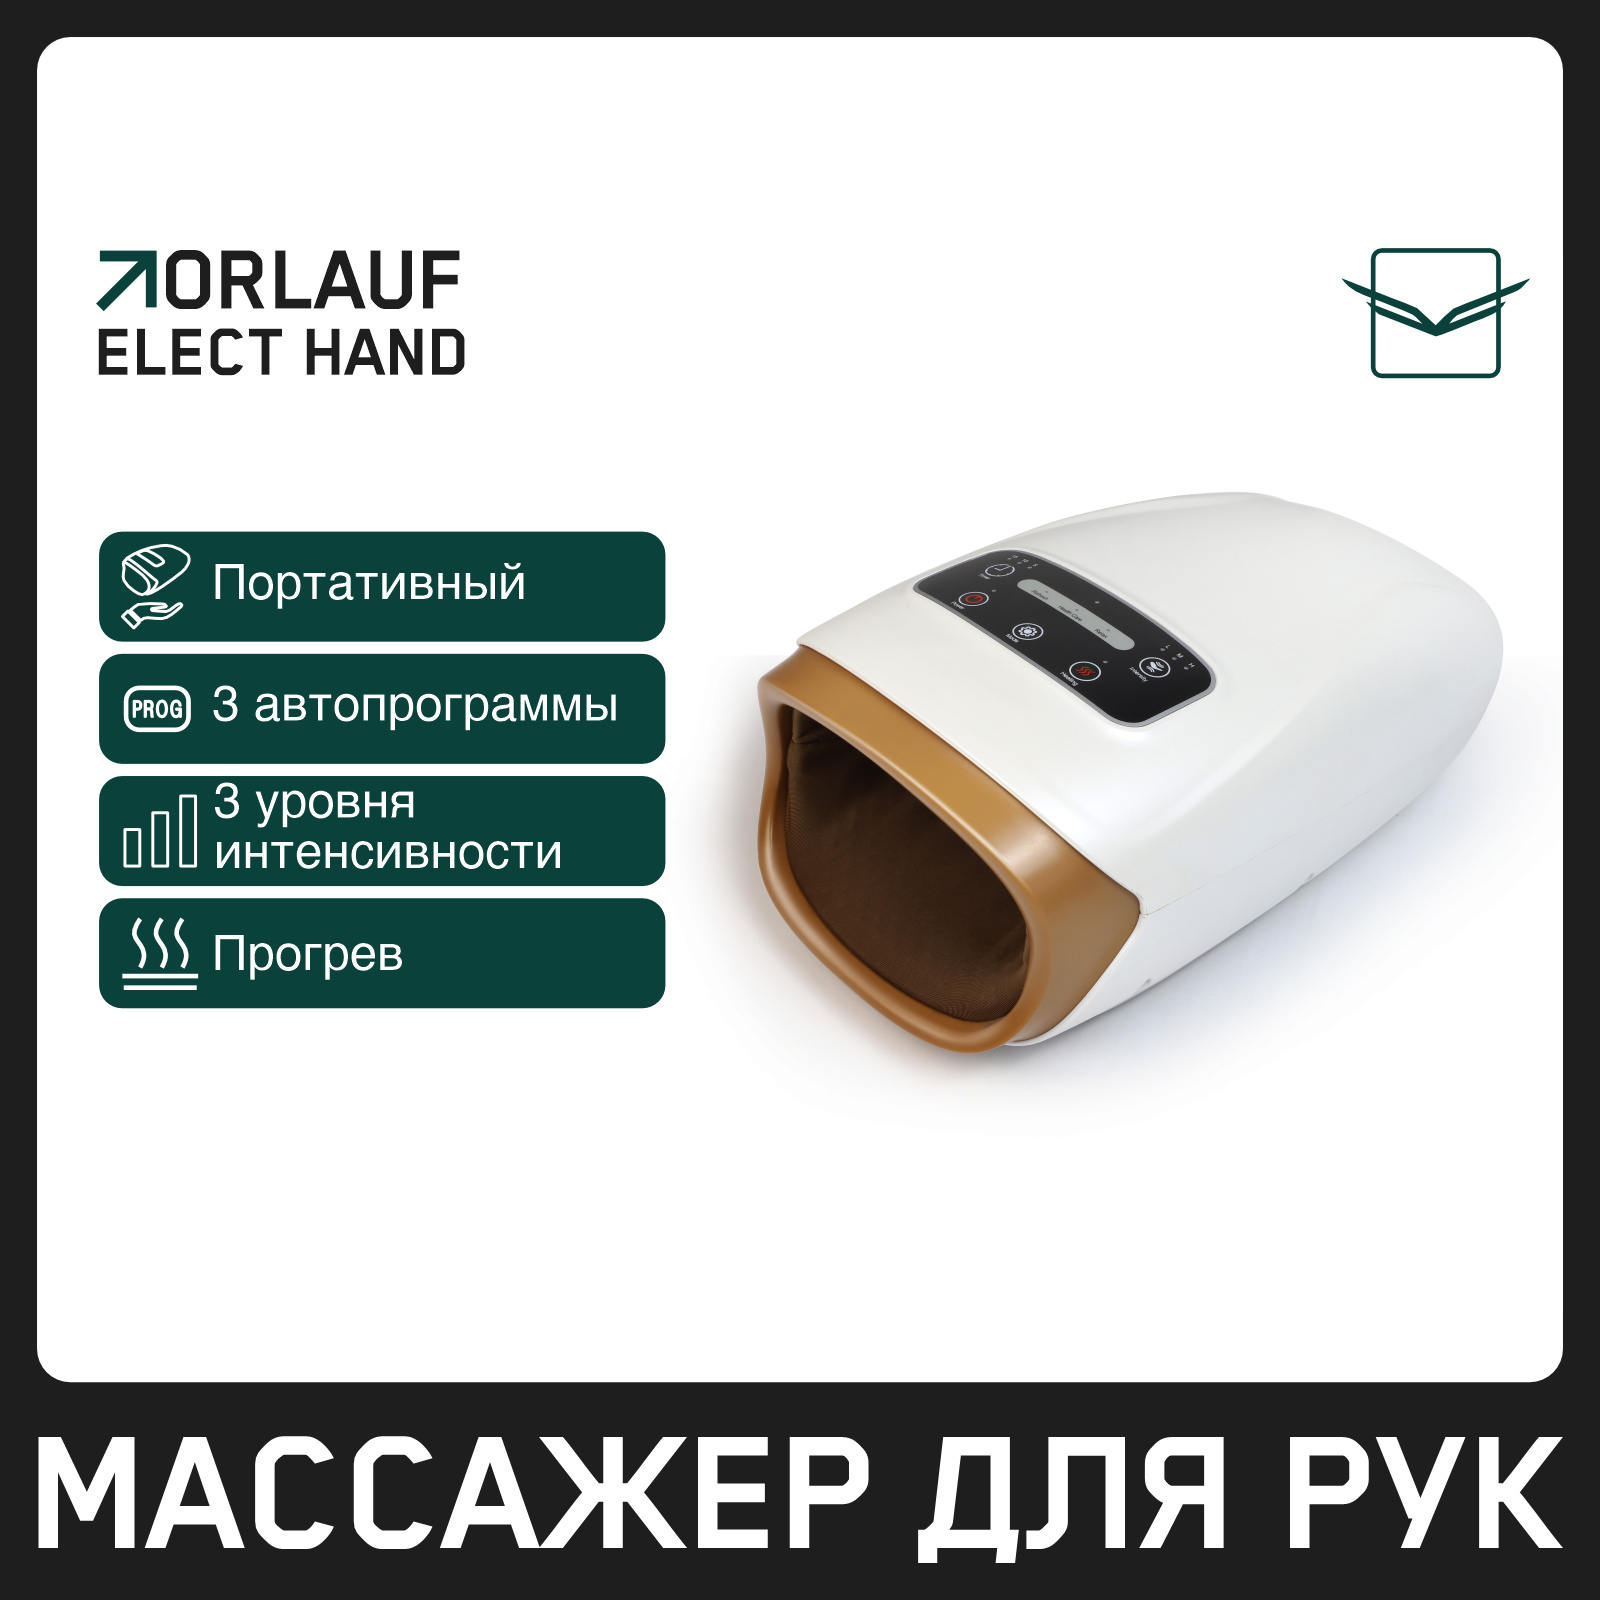 Orlauf Elect Hand из каталога устройств для массажа в Омске по цене 9900 ₽